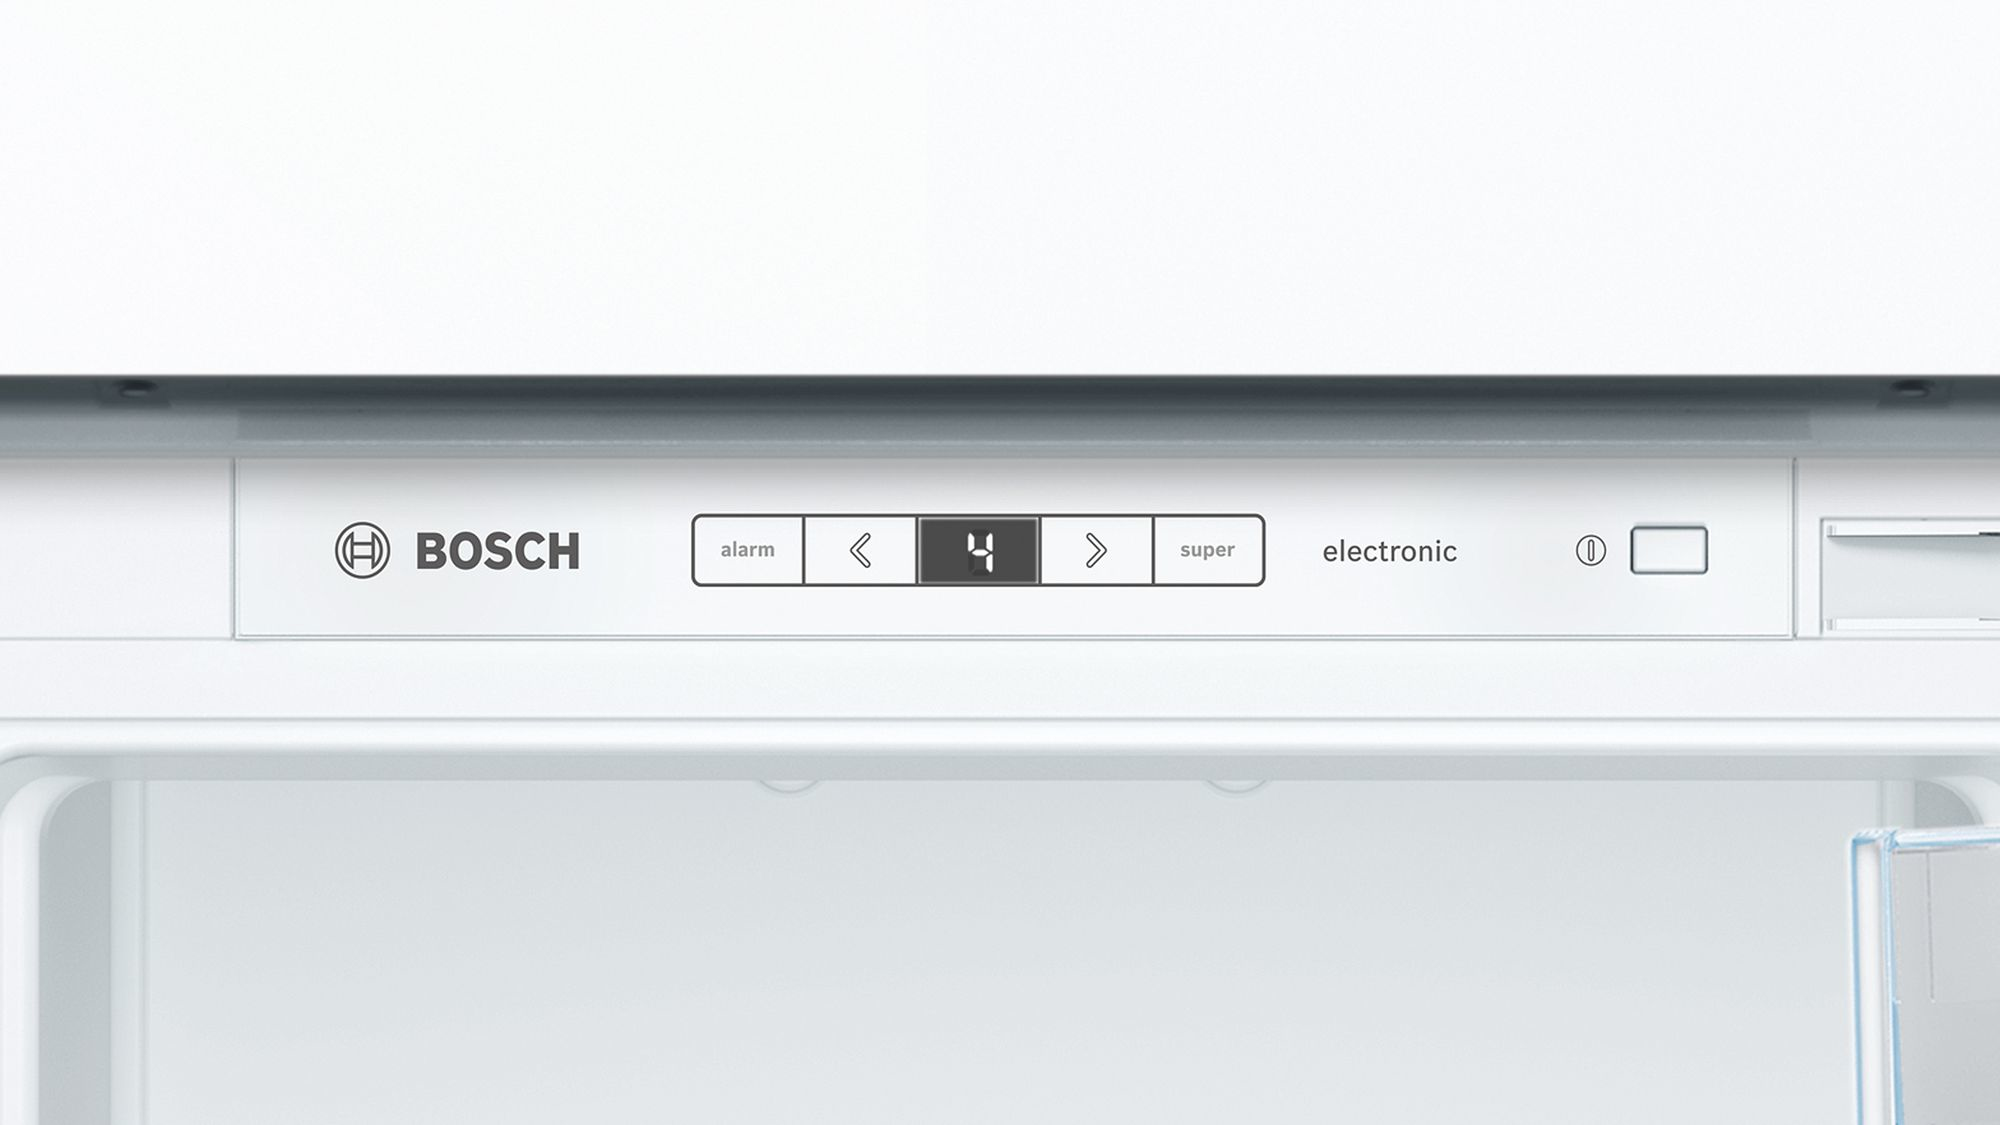 Bosch Serie 6 KIR41AFF0 frigorifero Da incasso Bianco 211 L A++ [KIR41AFF0]